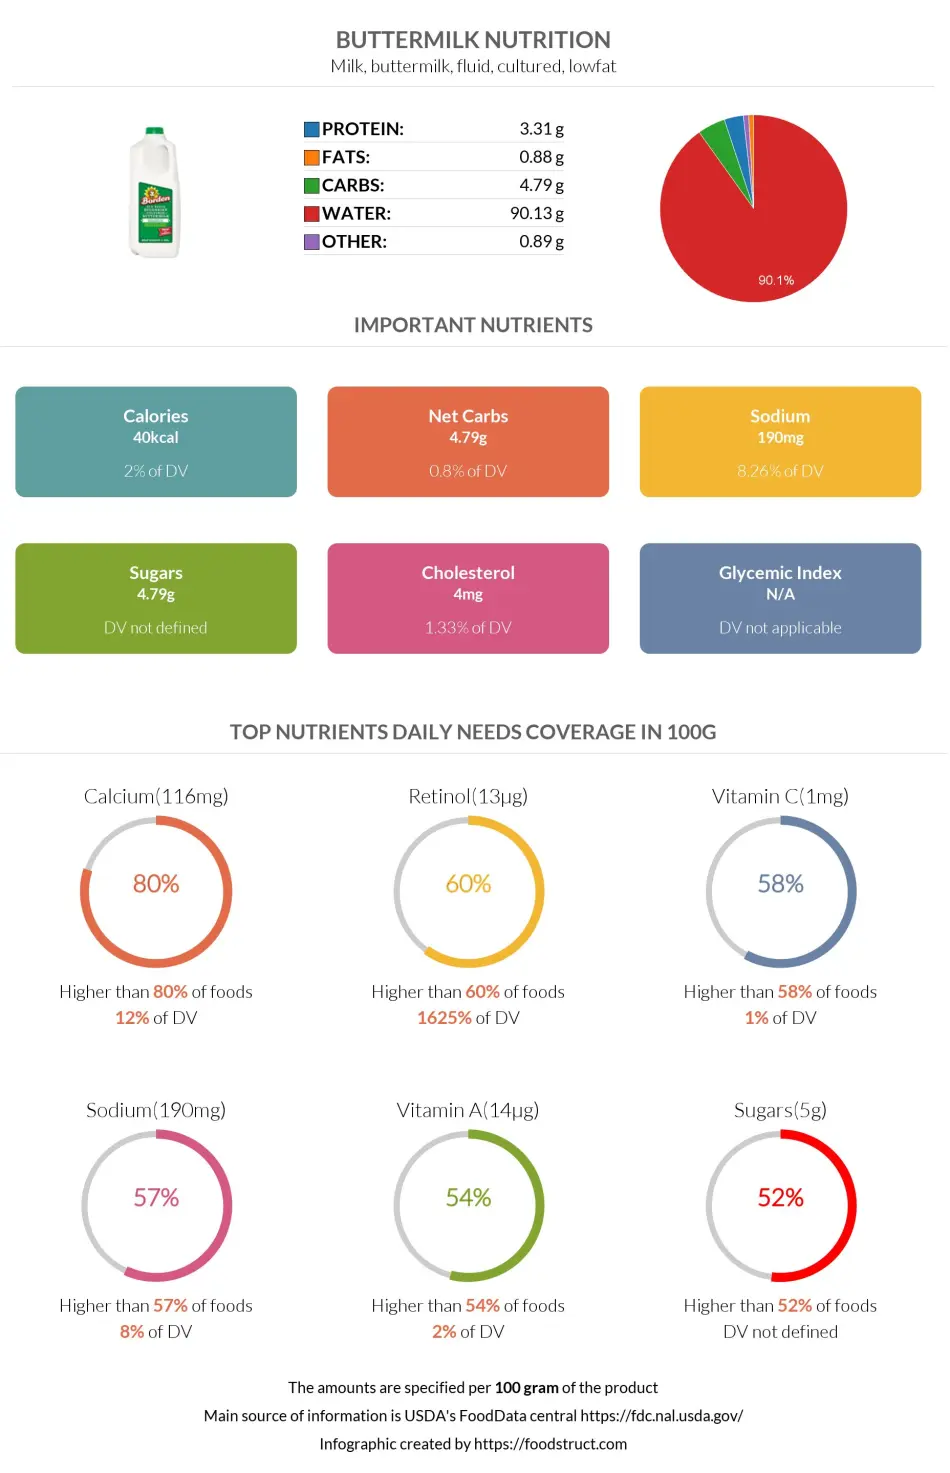 Buttermilk nutrition infographic